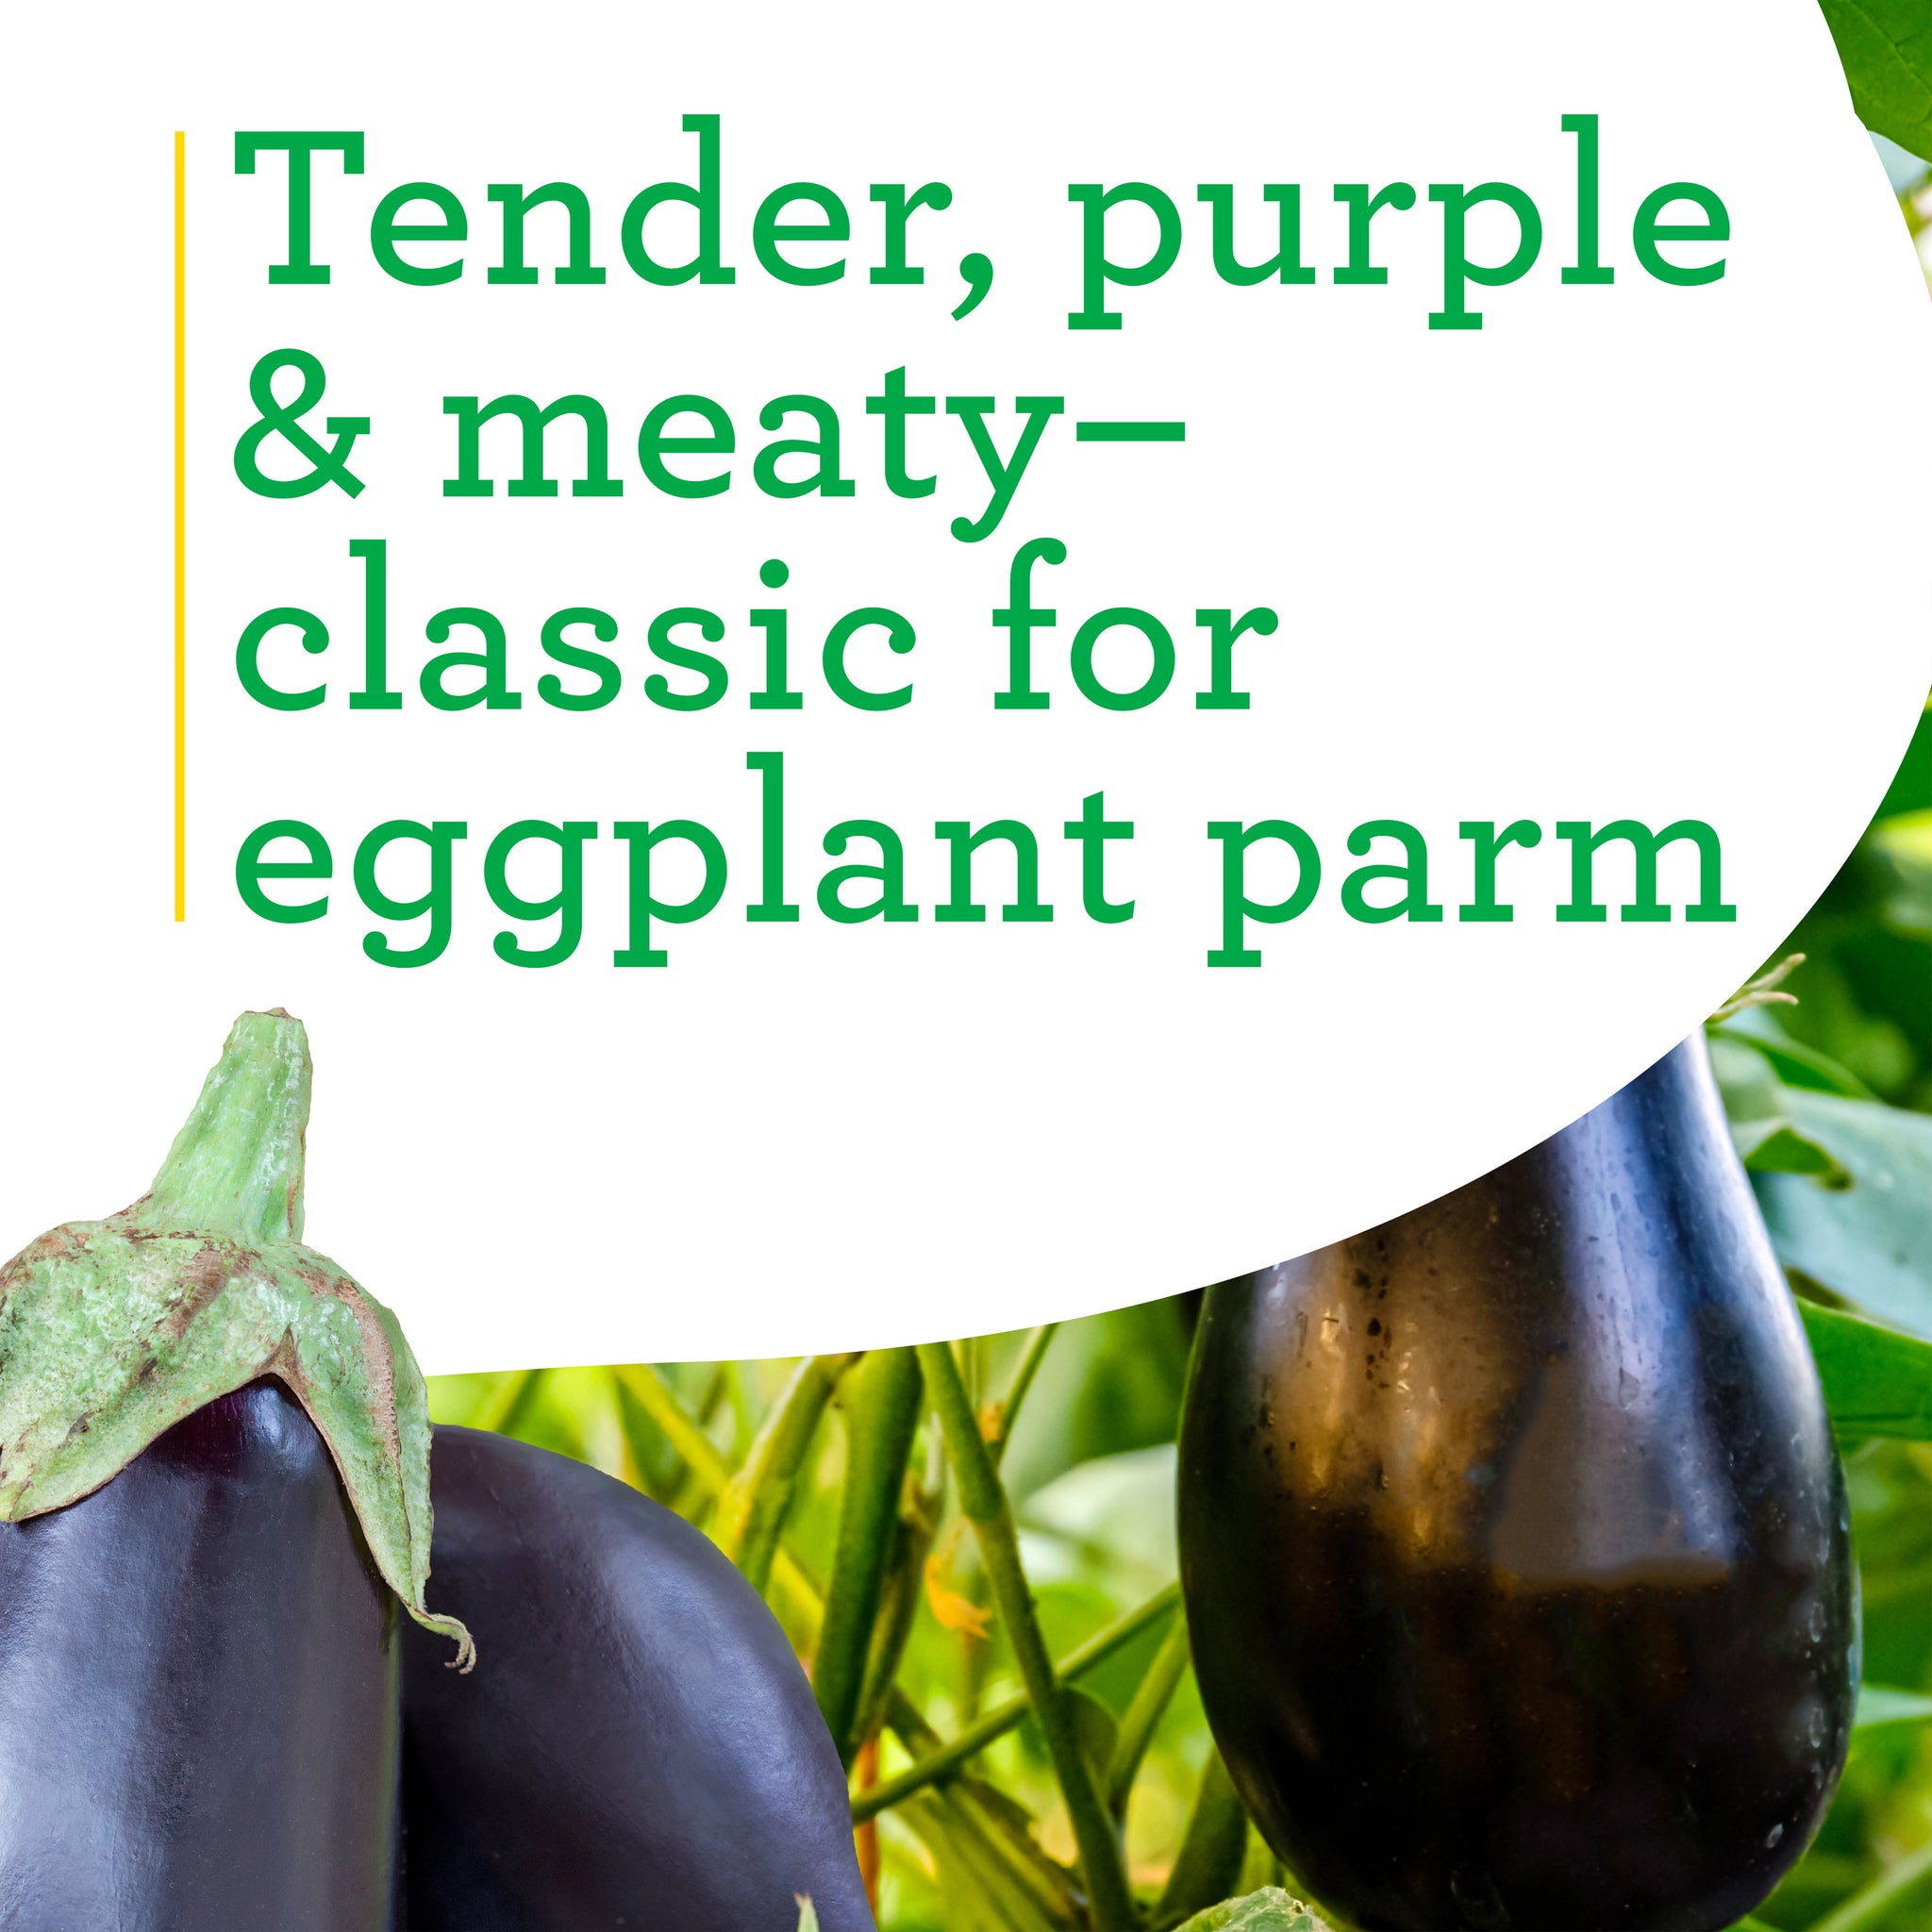 Black Beauty Eggplant (2 Pack)